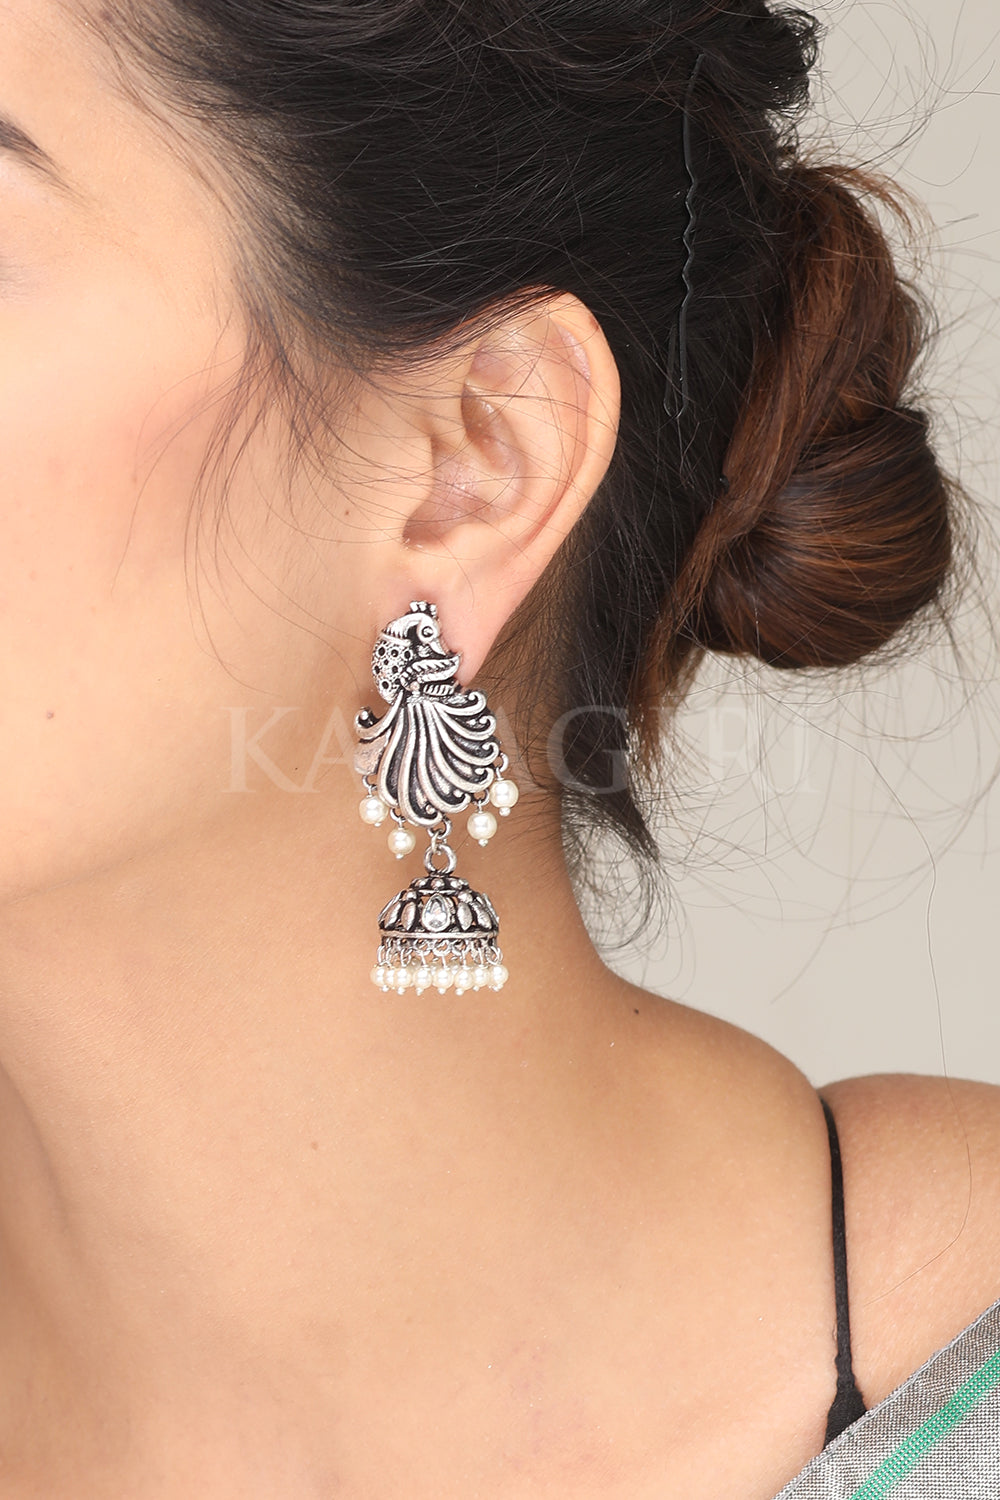 Silver Earrings with Pyramid Shaped Design | Trendy Designer Jhumki Earring  - Earrings, Jewellery - FOLKWAYS